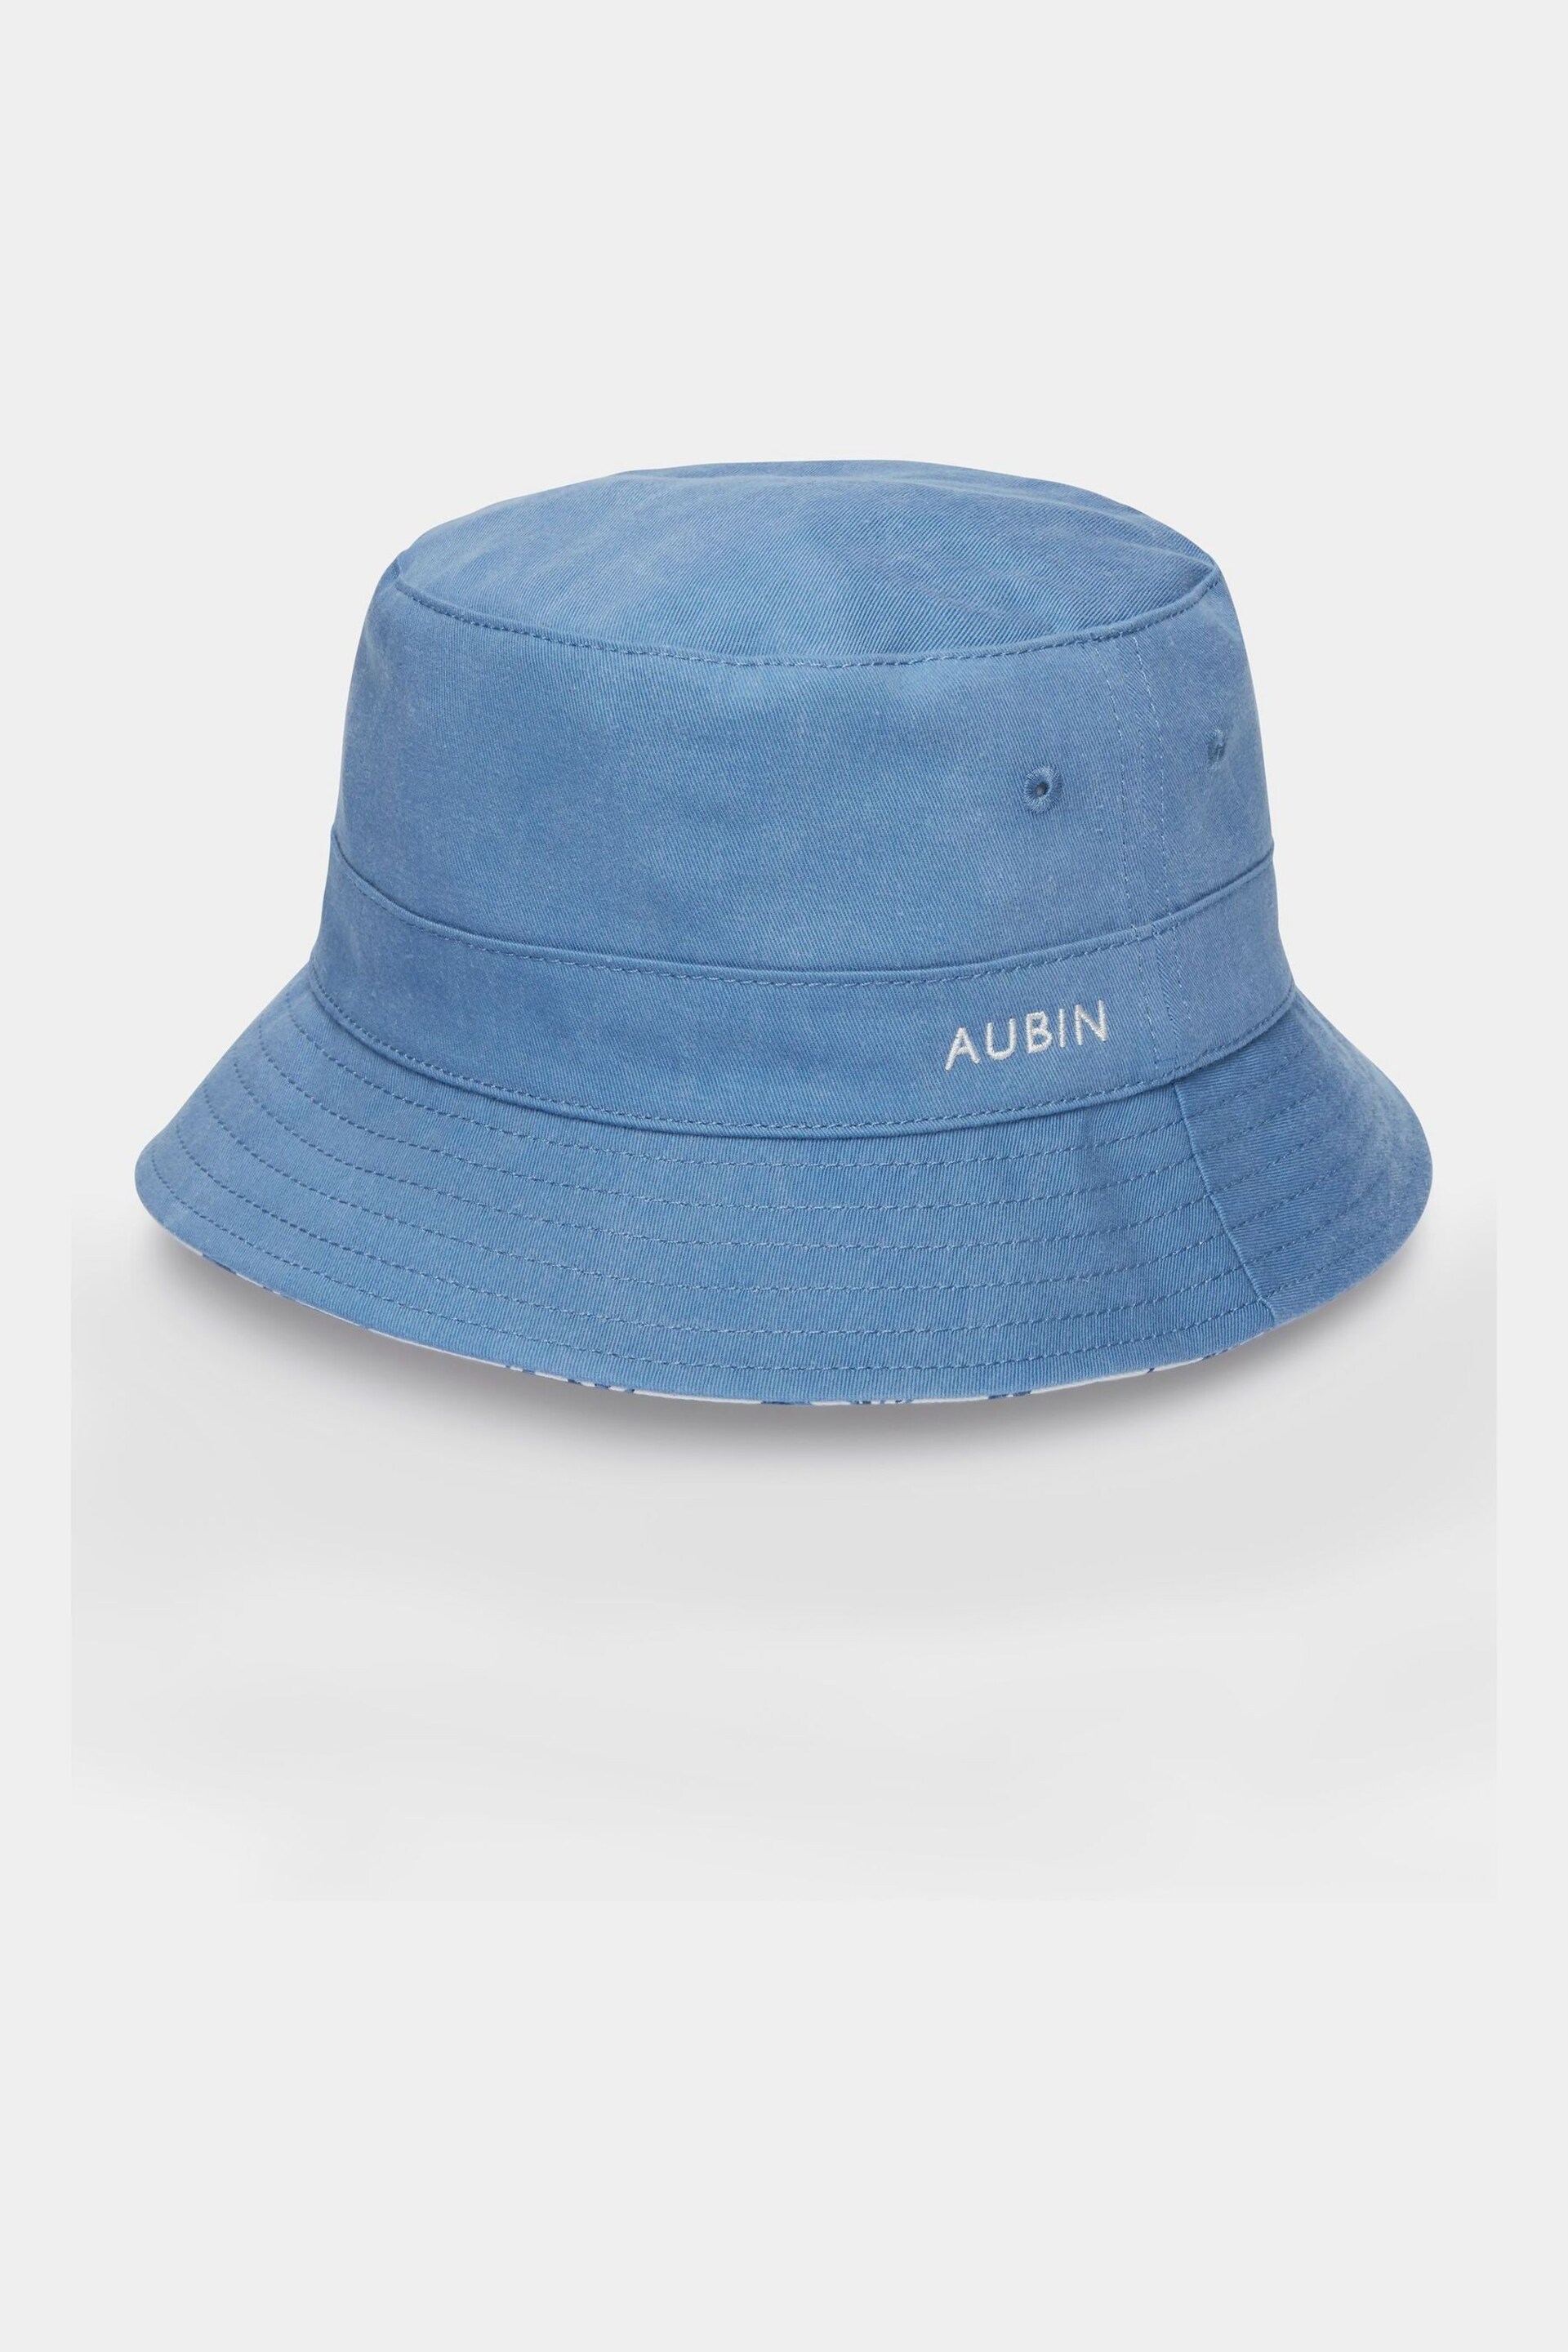 Aubin Farthing Bucket Hat - Image 1 of 3